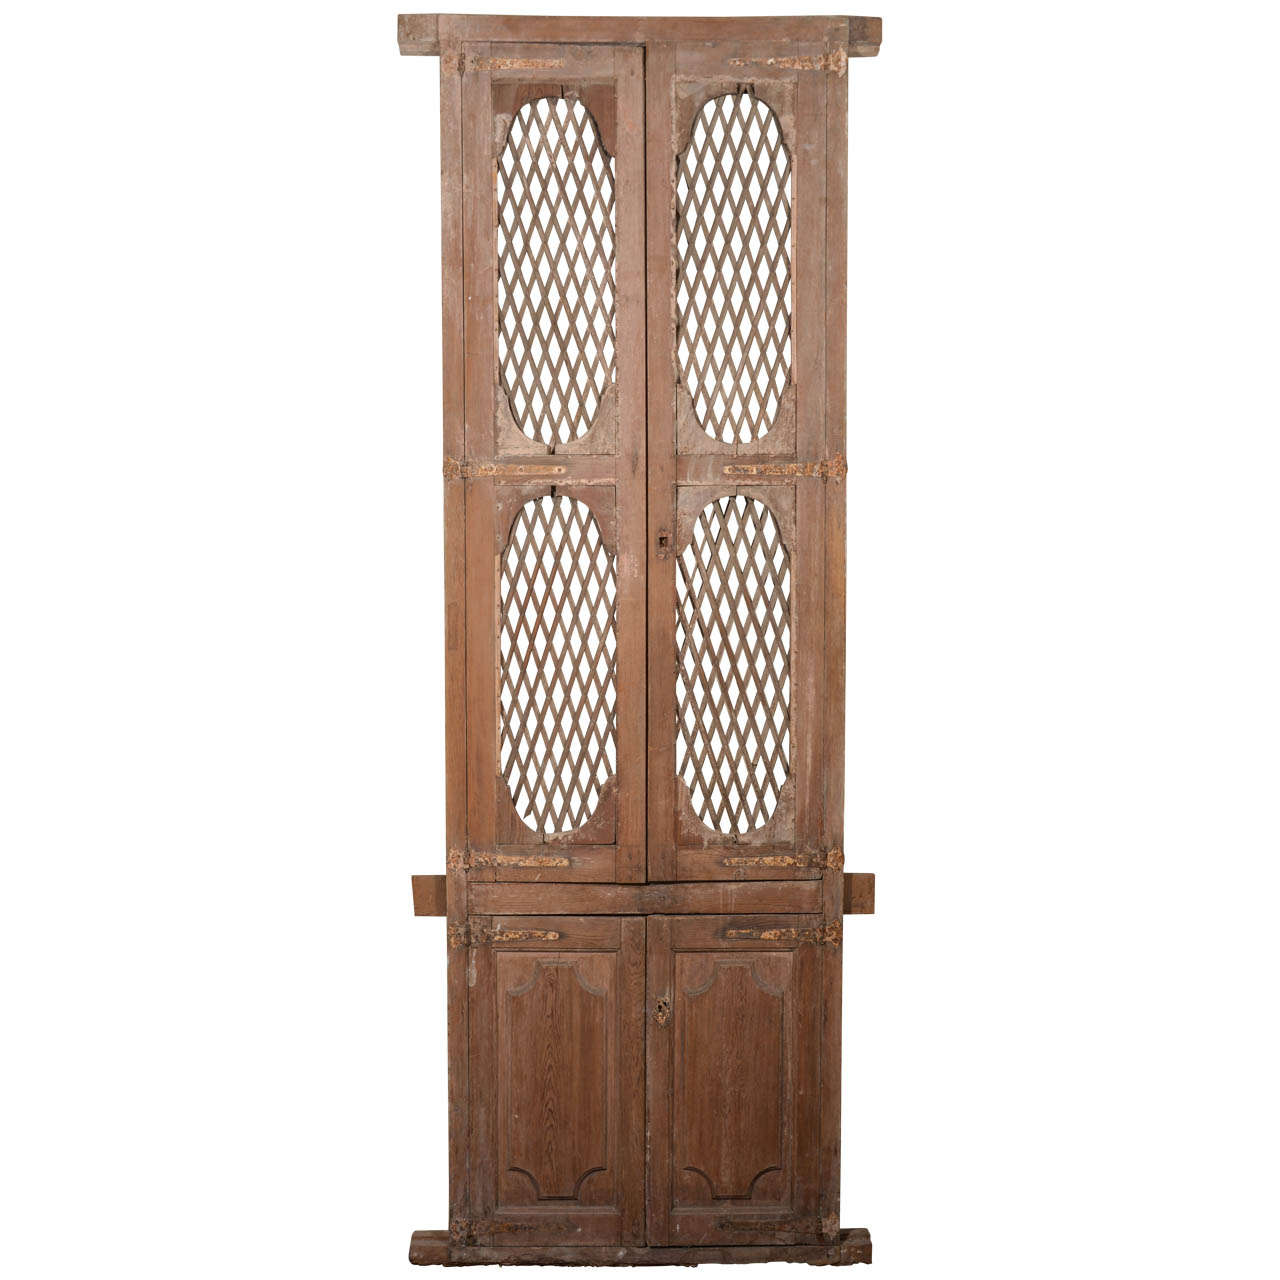 18th c. Italian Doors with Lattice Work Panels